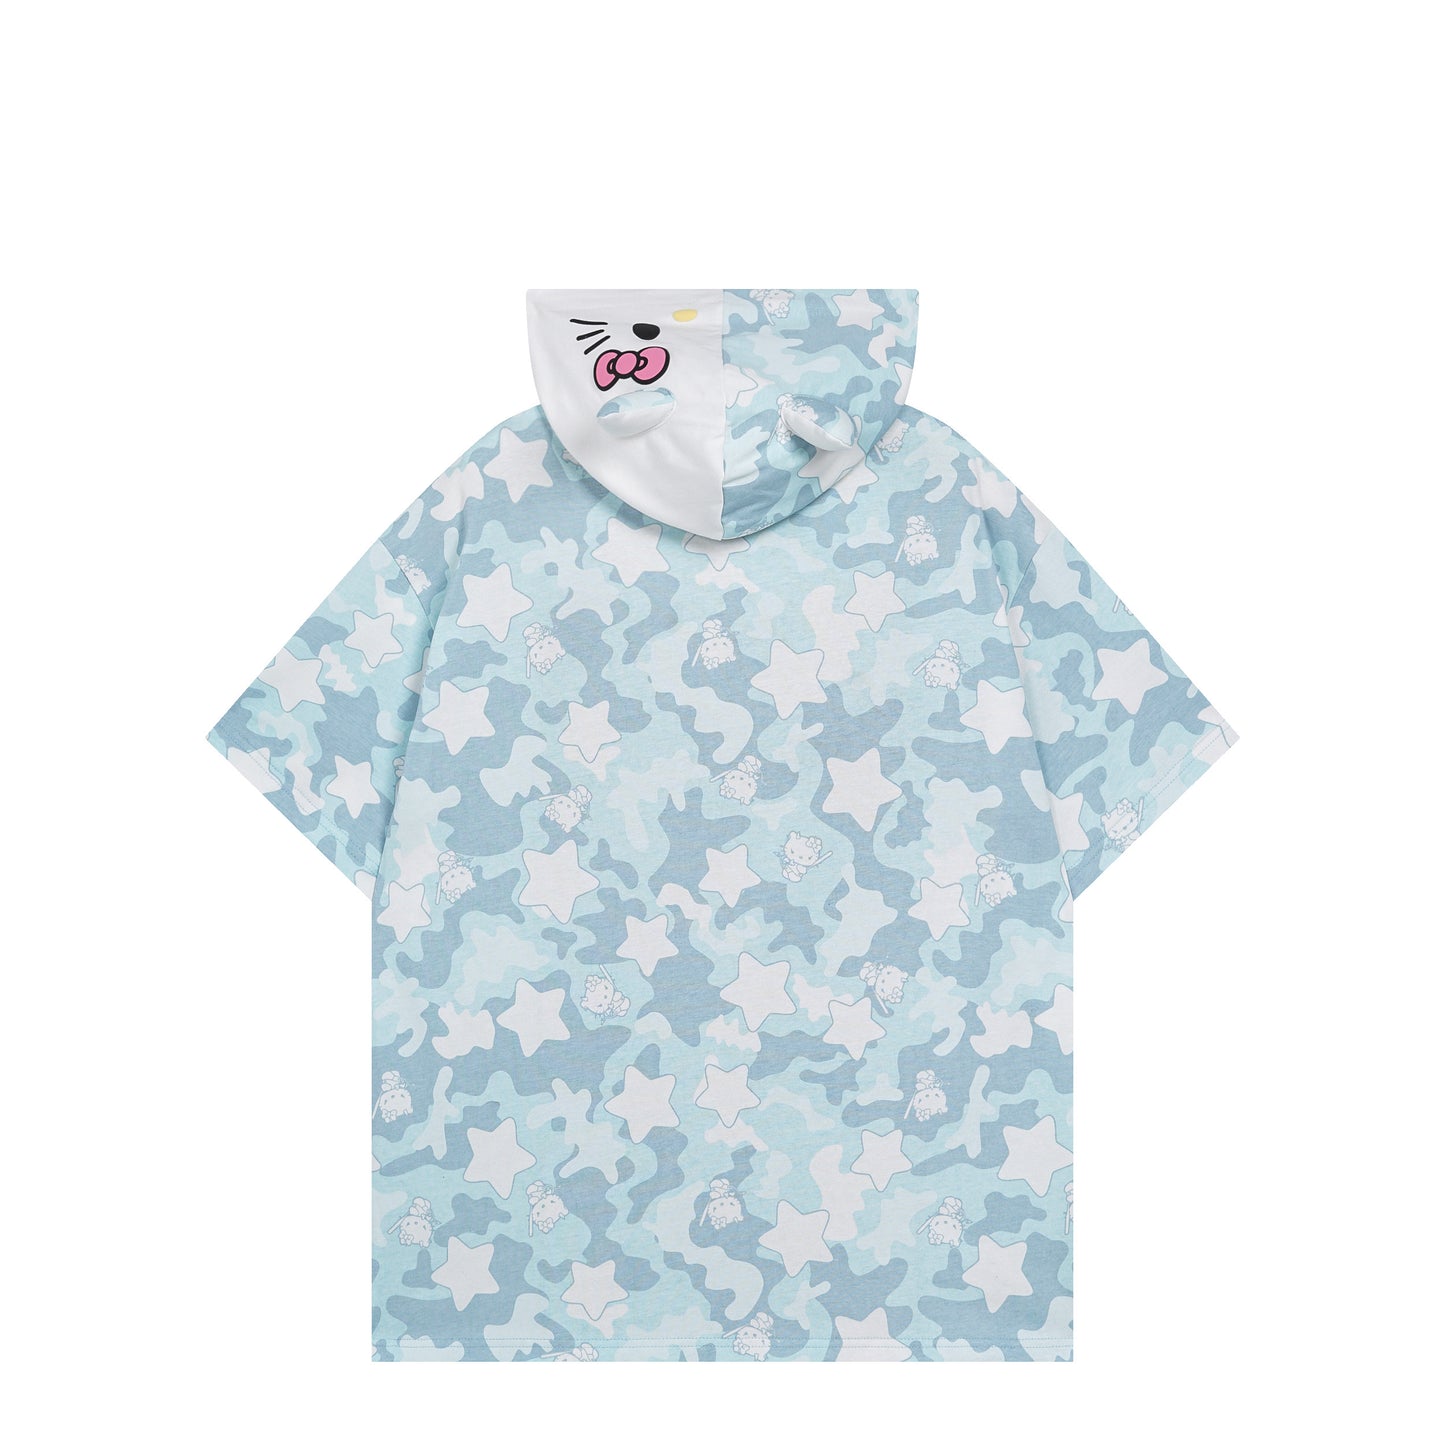 Hellokitty Camouflage Hooded Short Sleeve Tee Casual Summer T Shirt Top